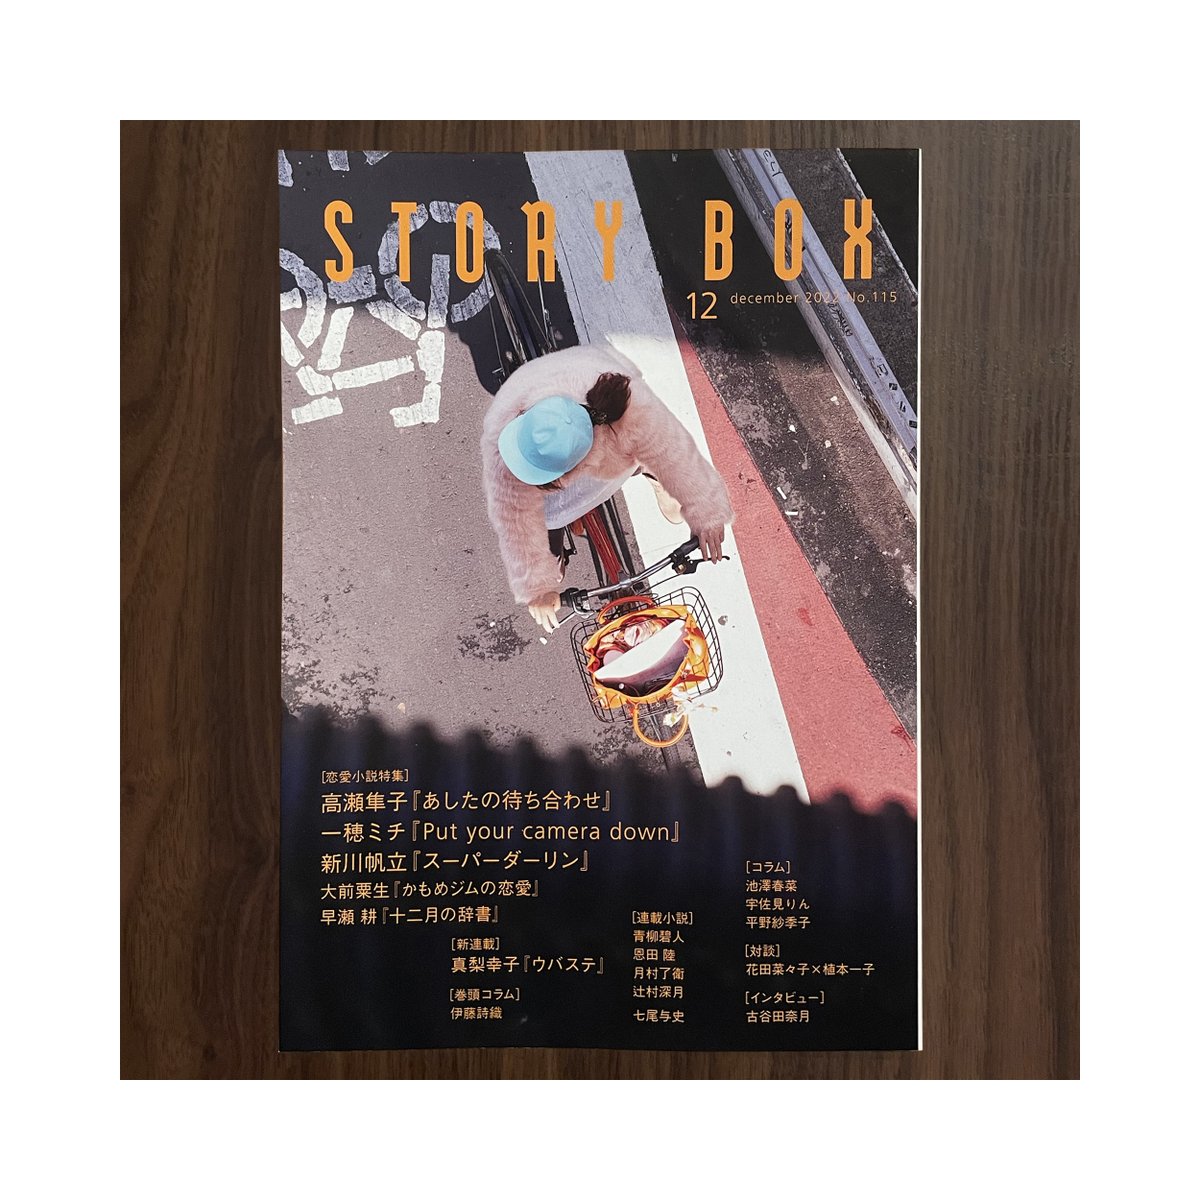 [Works]
『STORY BOX』12月号(小学館)掲載、
「スーパーダーリン」(著:新川帆立)
扉絵を担当しました👜

デザイン:鈴木成一デザイン室 